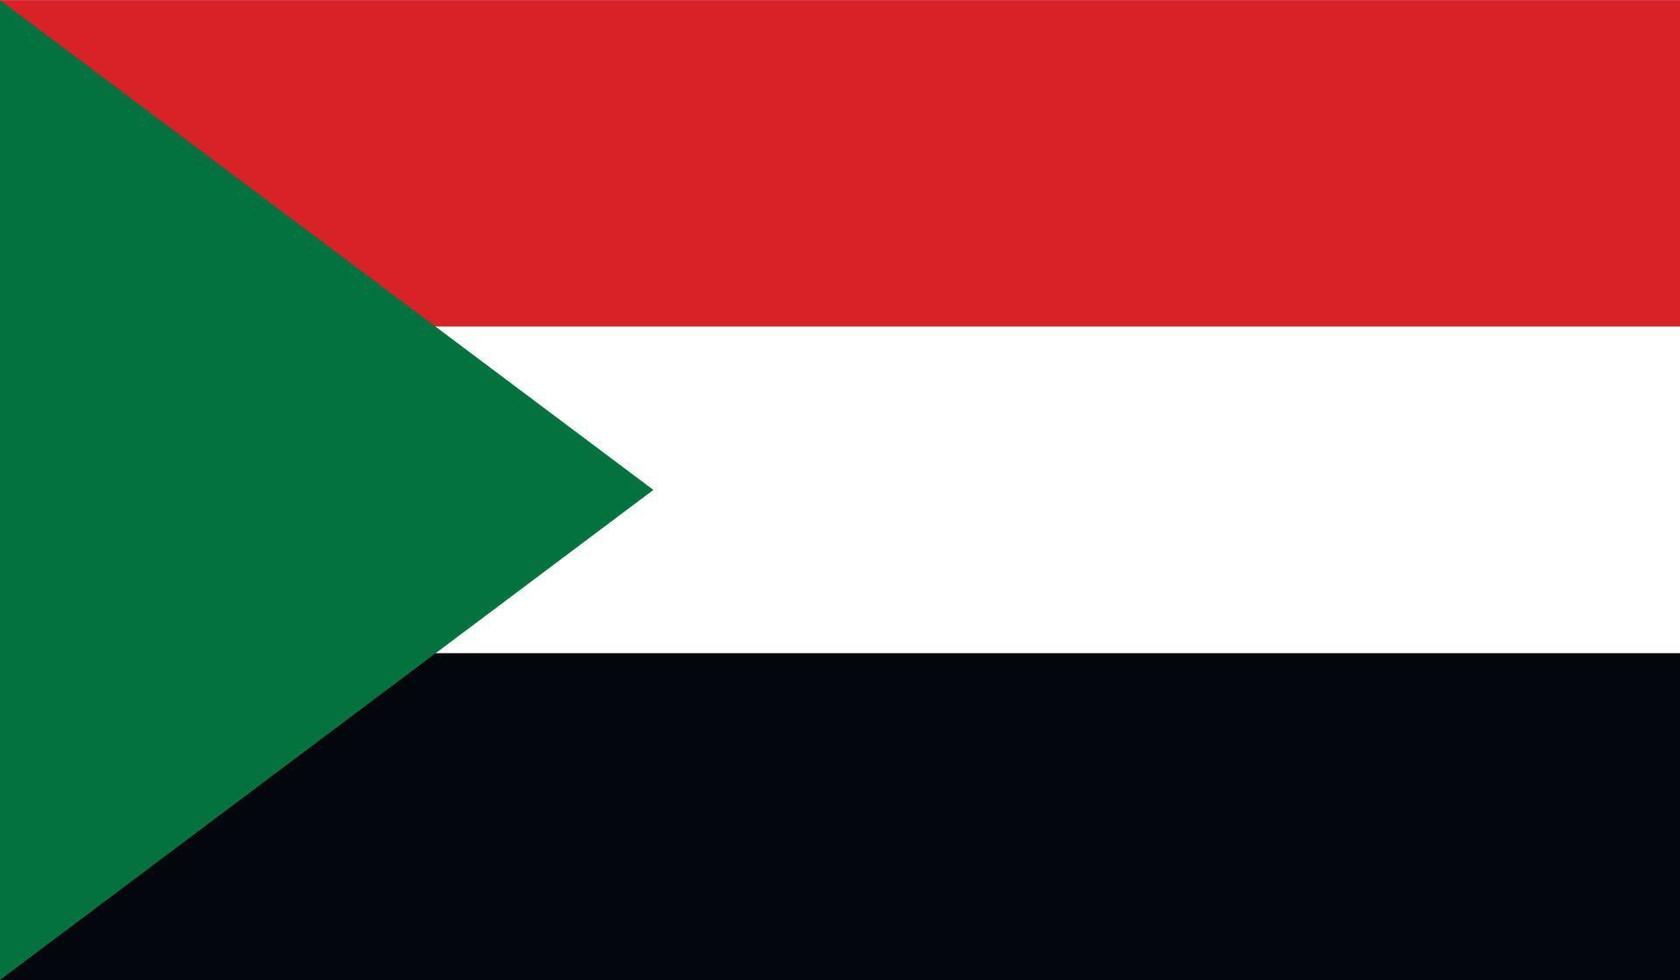 Sudan flag image vector